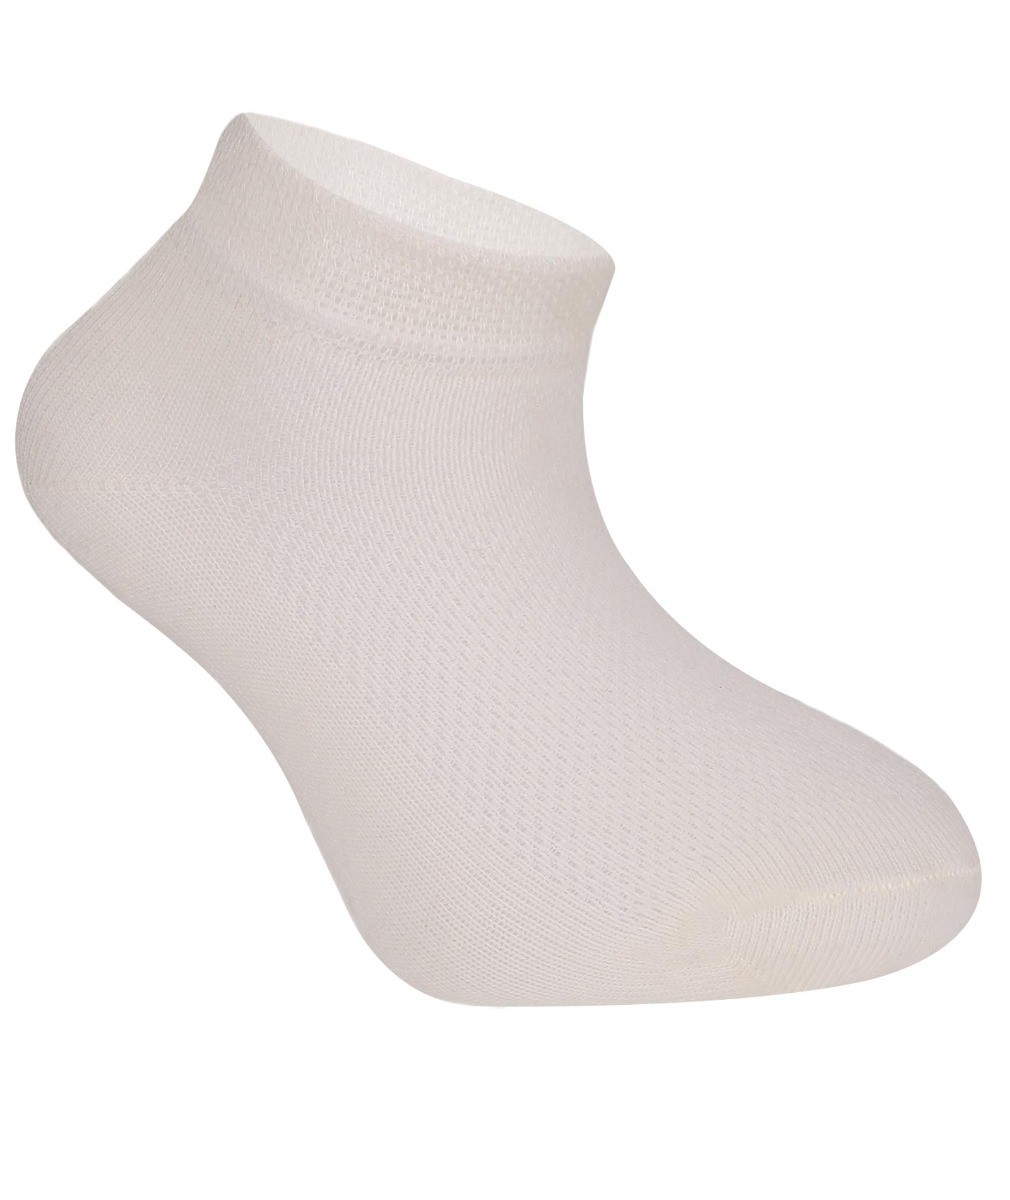 Unisex Stretch Cotton Ankle Socks, for Boys & Girls - Cream